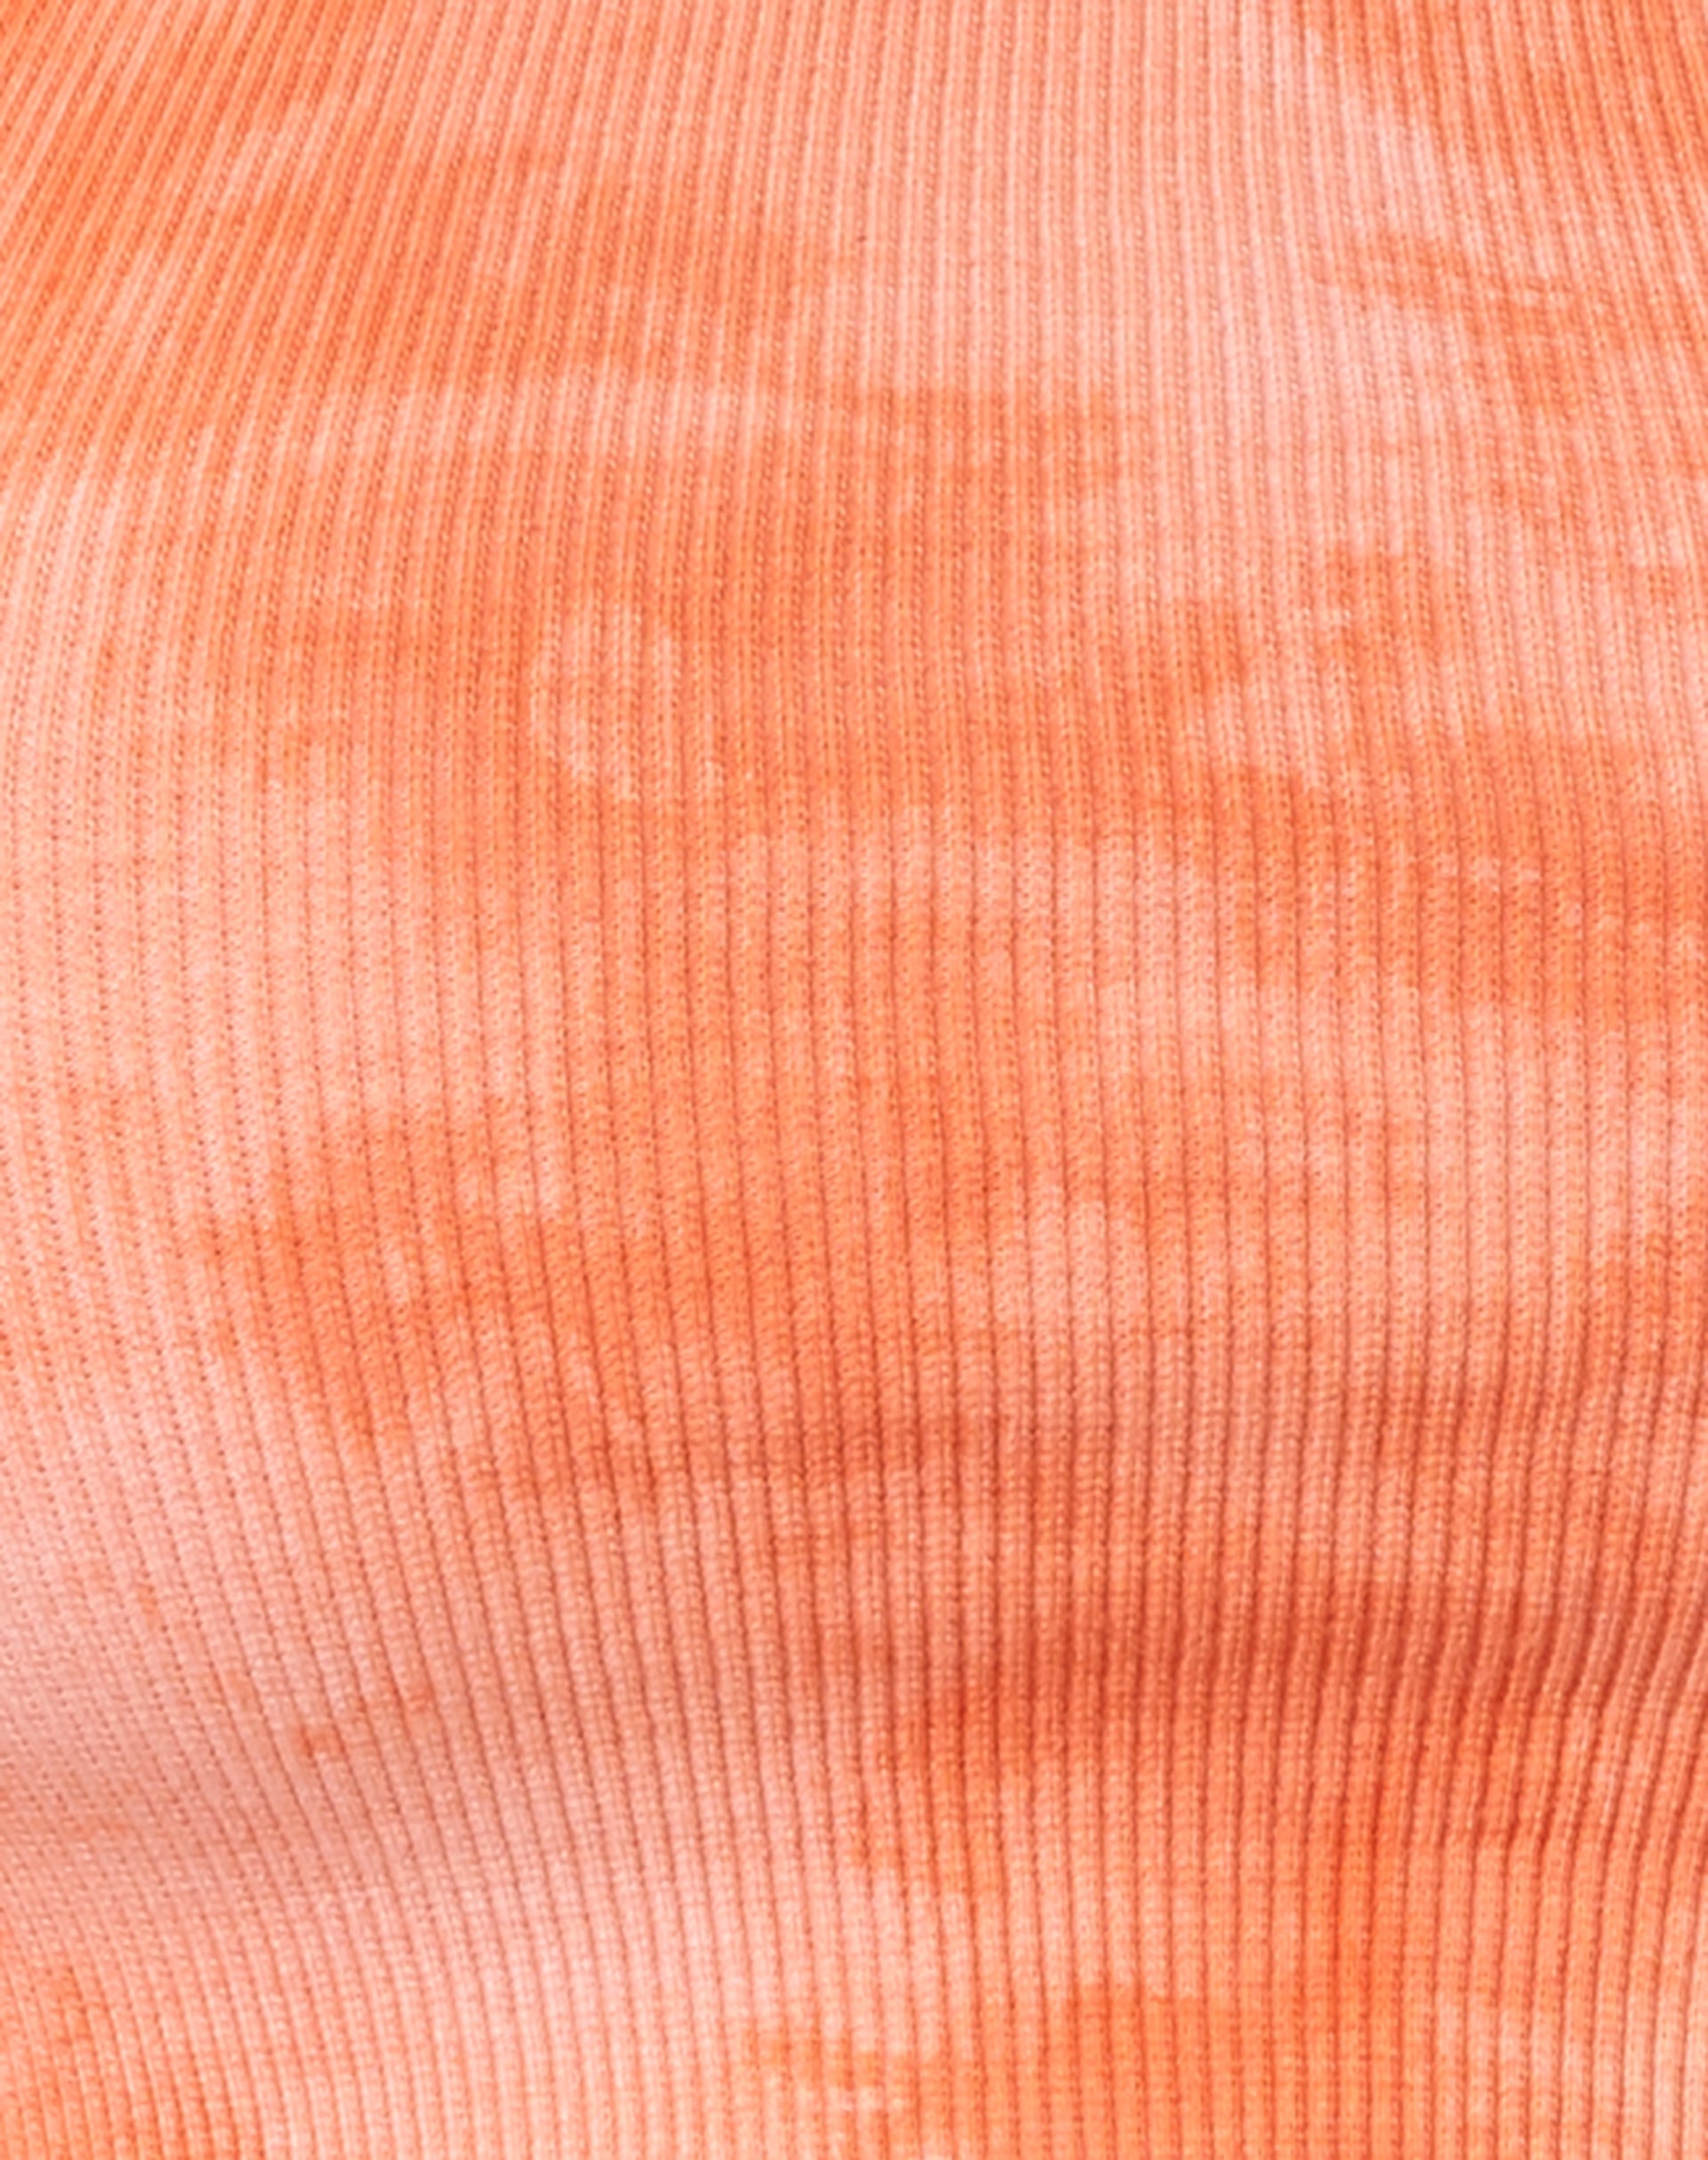 Givas Crop Top in Tangerine Tie Dye